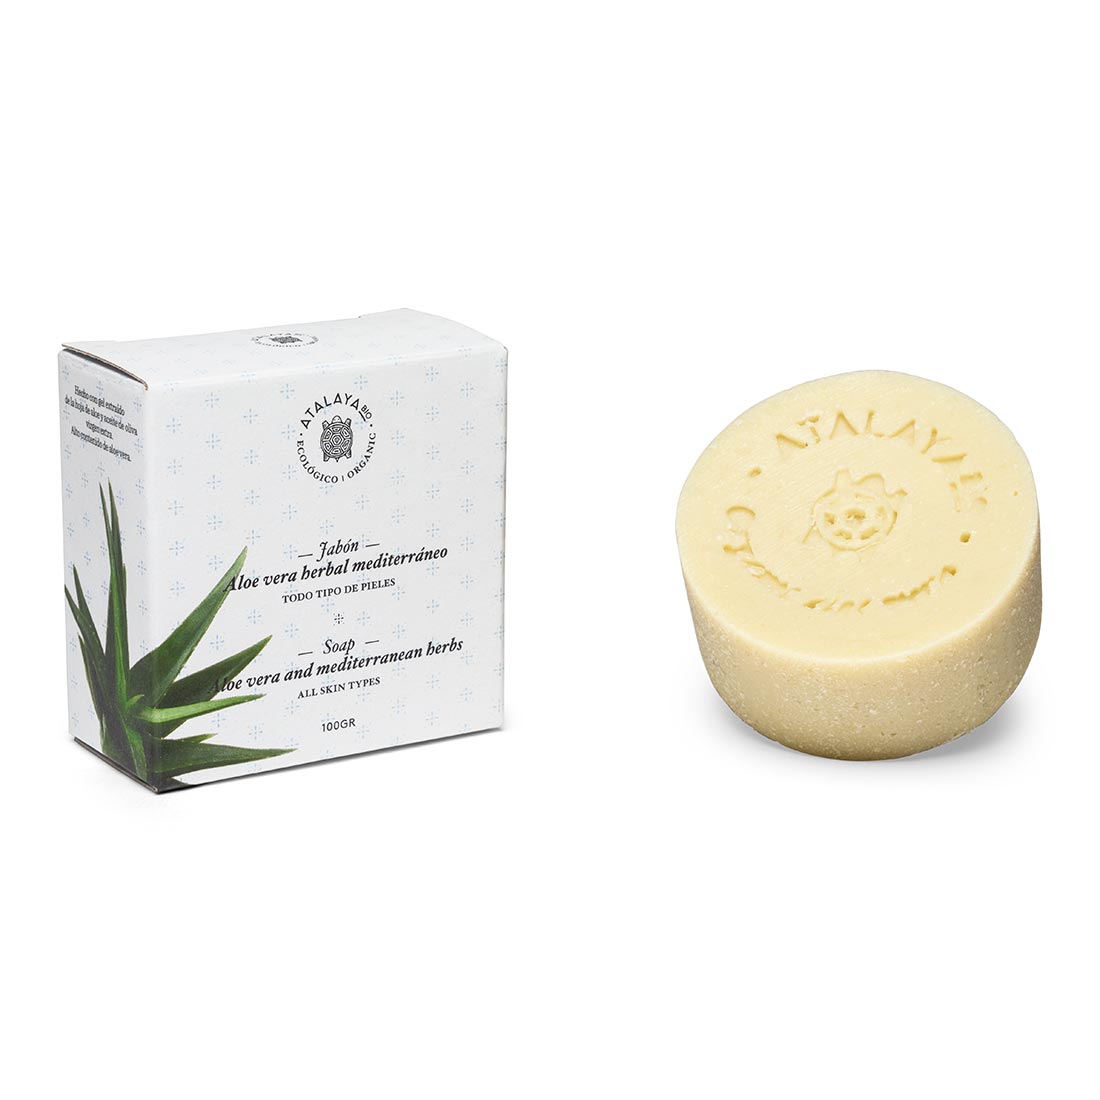 Aloe Vera Herbal Mediterranean Facial Handmade Soap